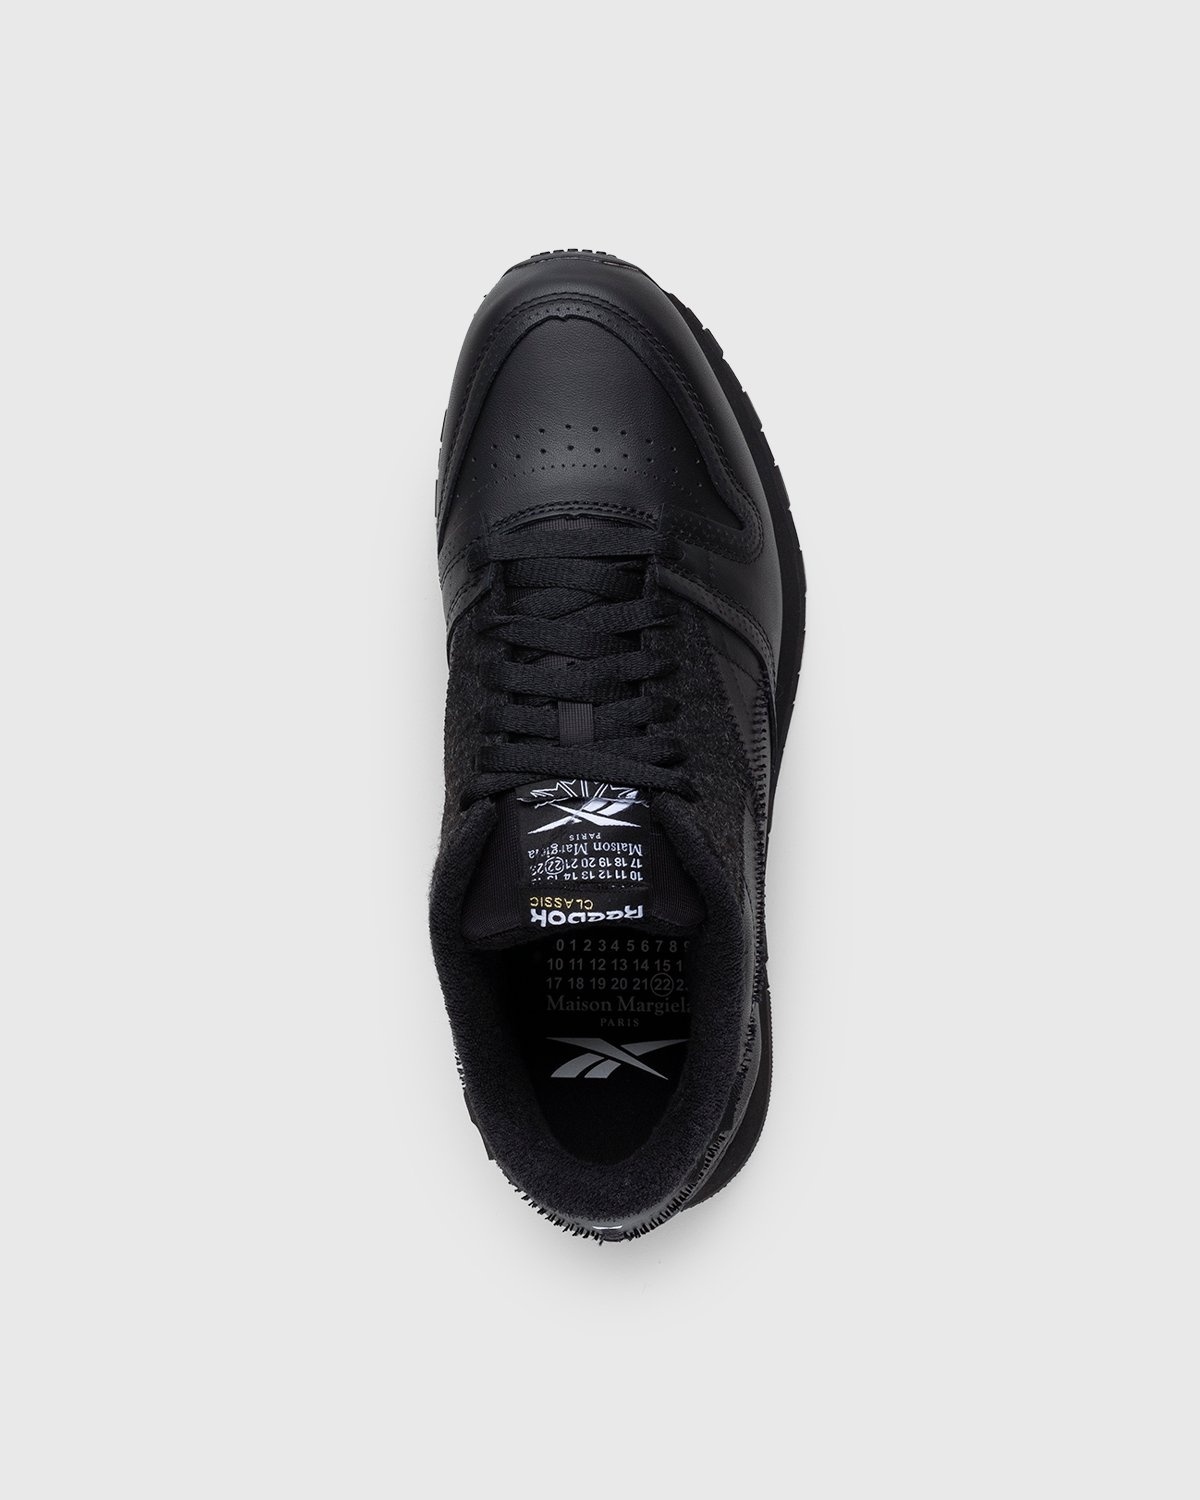 Maison Margiela x Reebok – Classic Leather Memory Of Black/Footwear White/Black - Sneakers - Black - Image 3